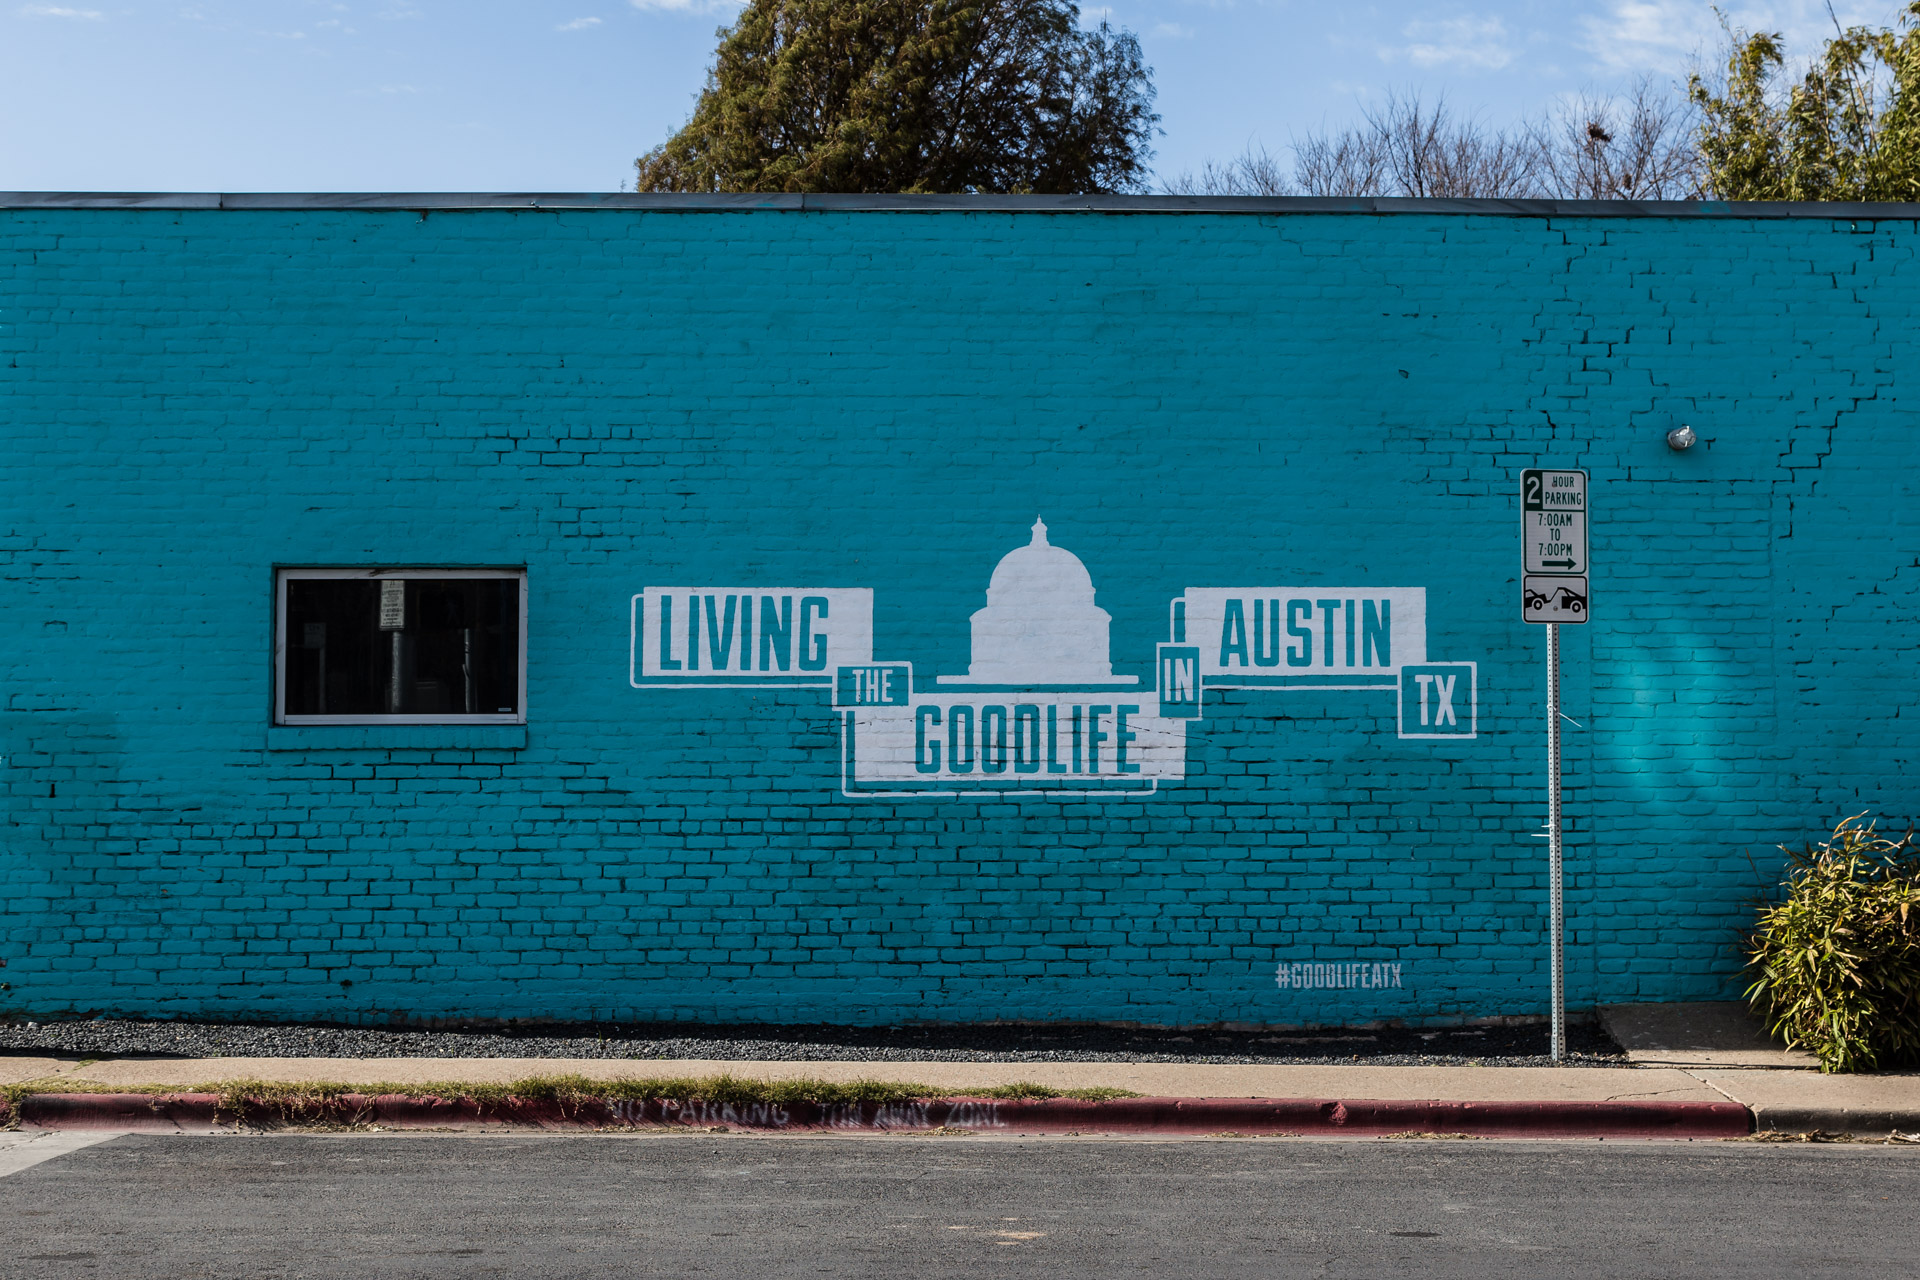 Austin Street Art (good life)